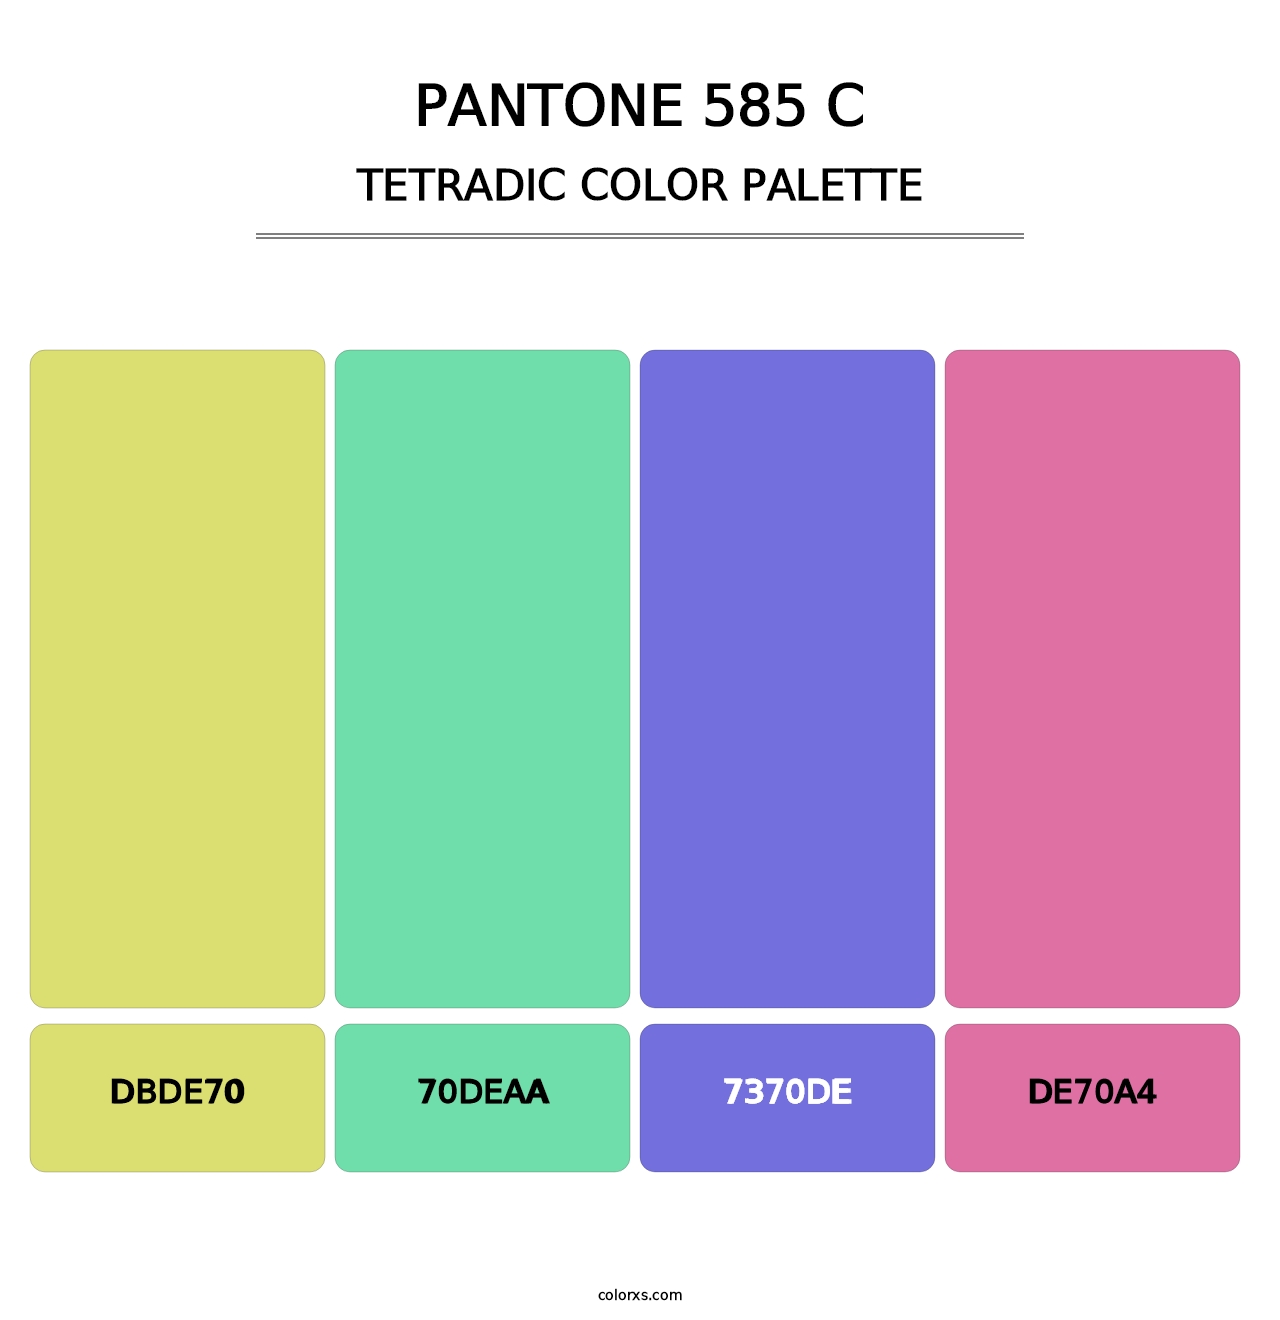 PANTONE 585 C - Tetradic Color Palette